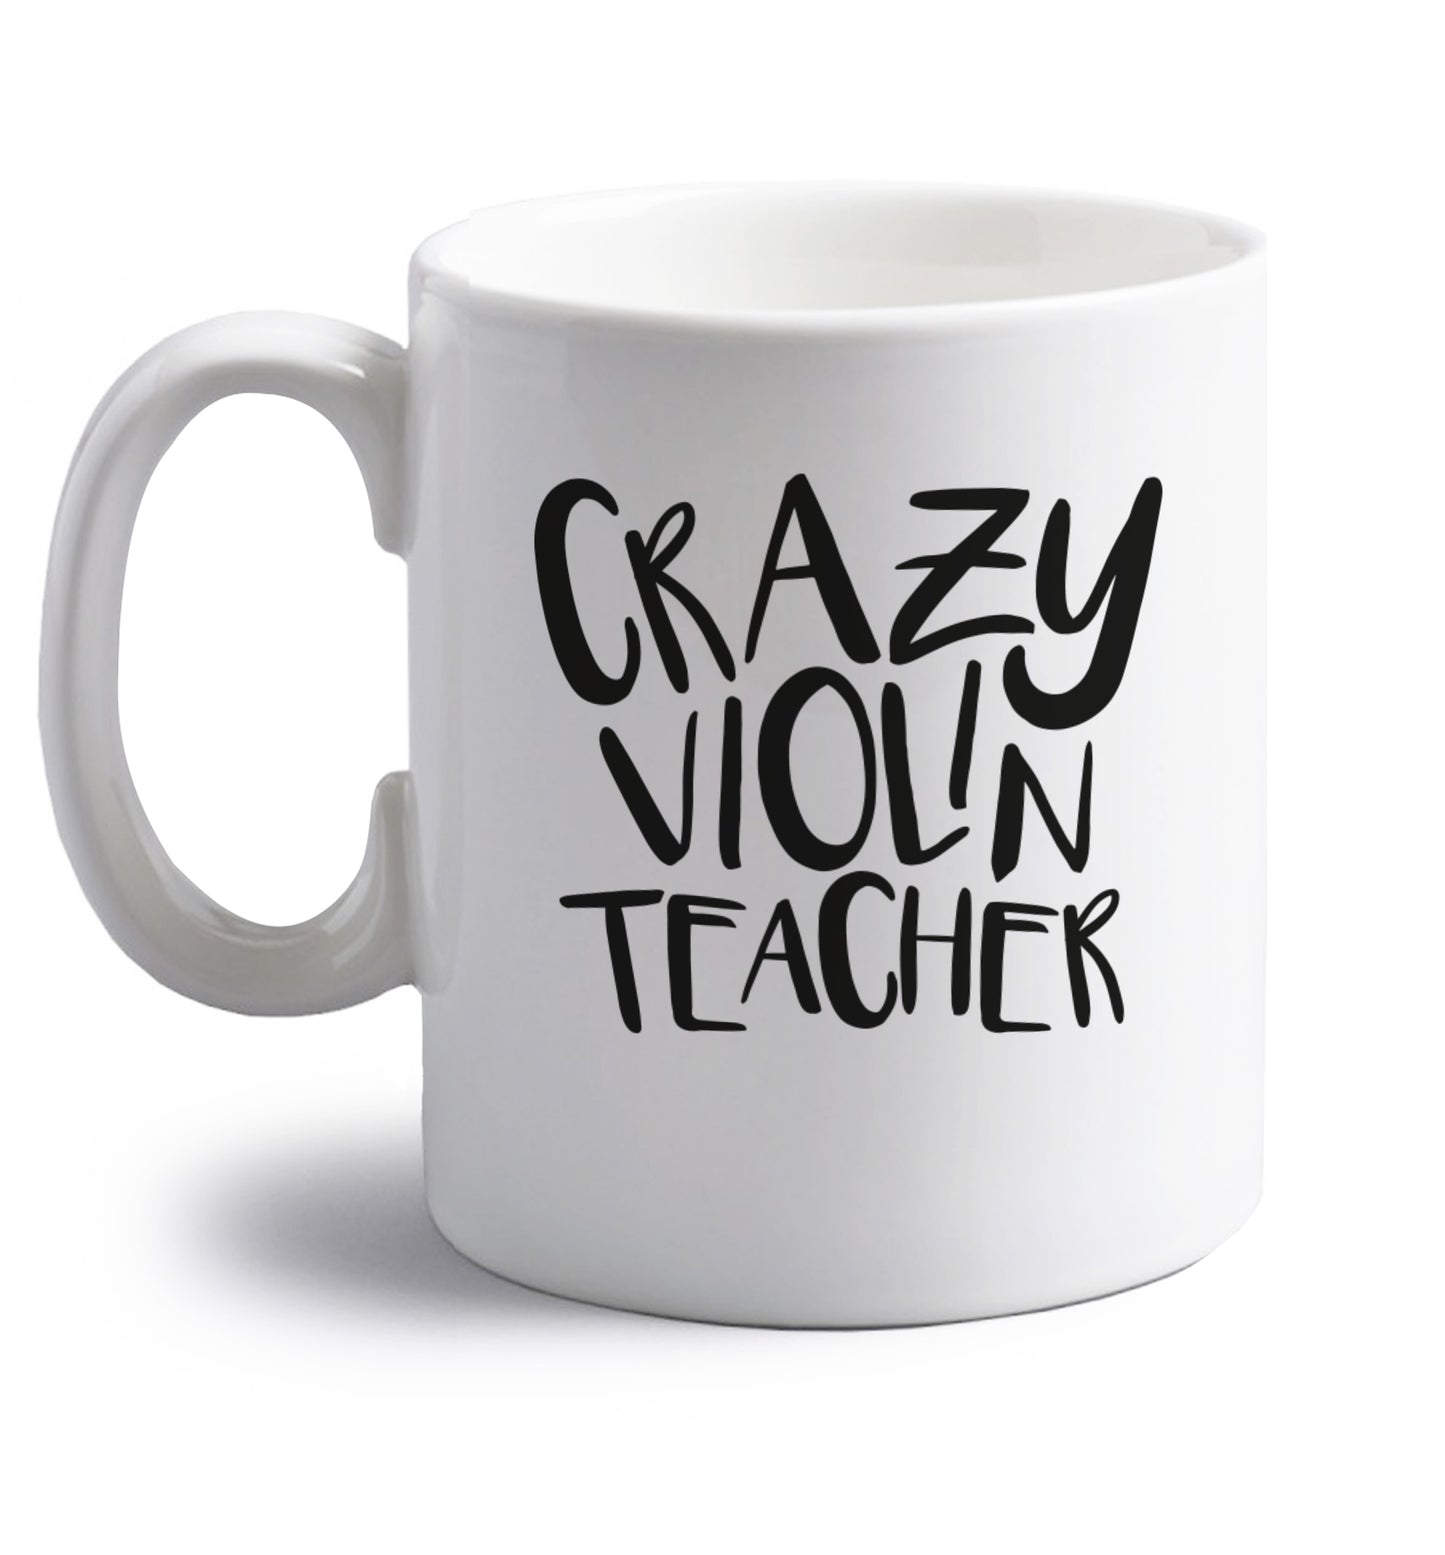 Crazy violin teacher right handed white ceramic mug 